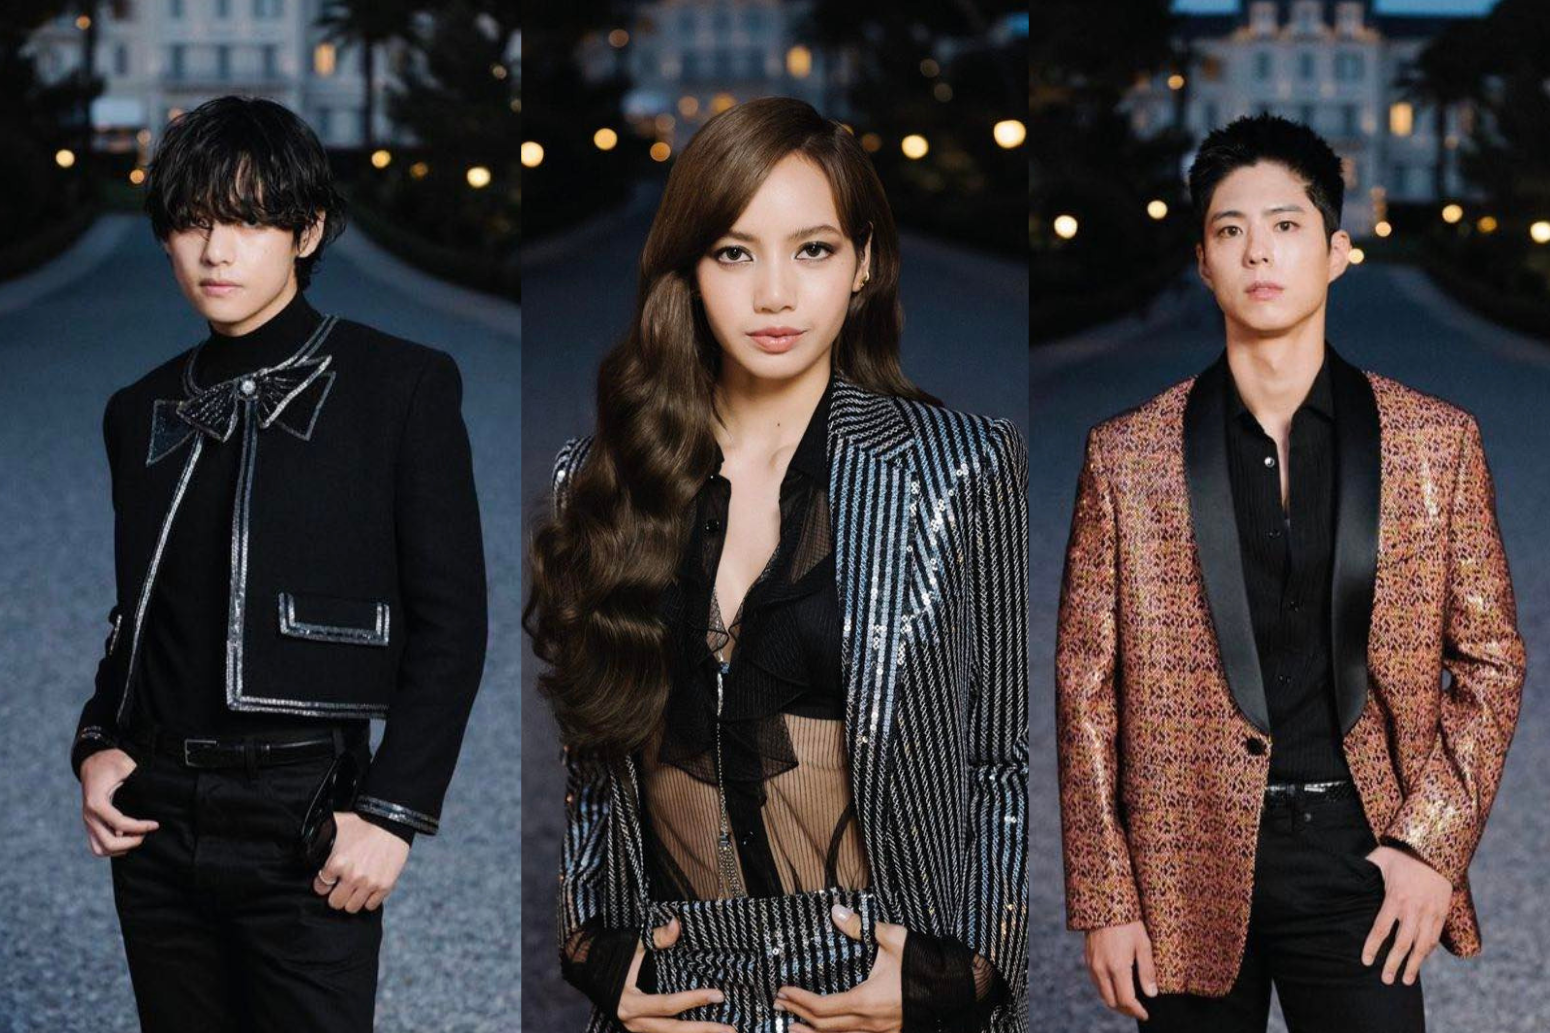 LOOK: Blackpink's Lisa, BTS' V, Park Bo-gum reunite at brand event